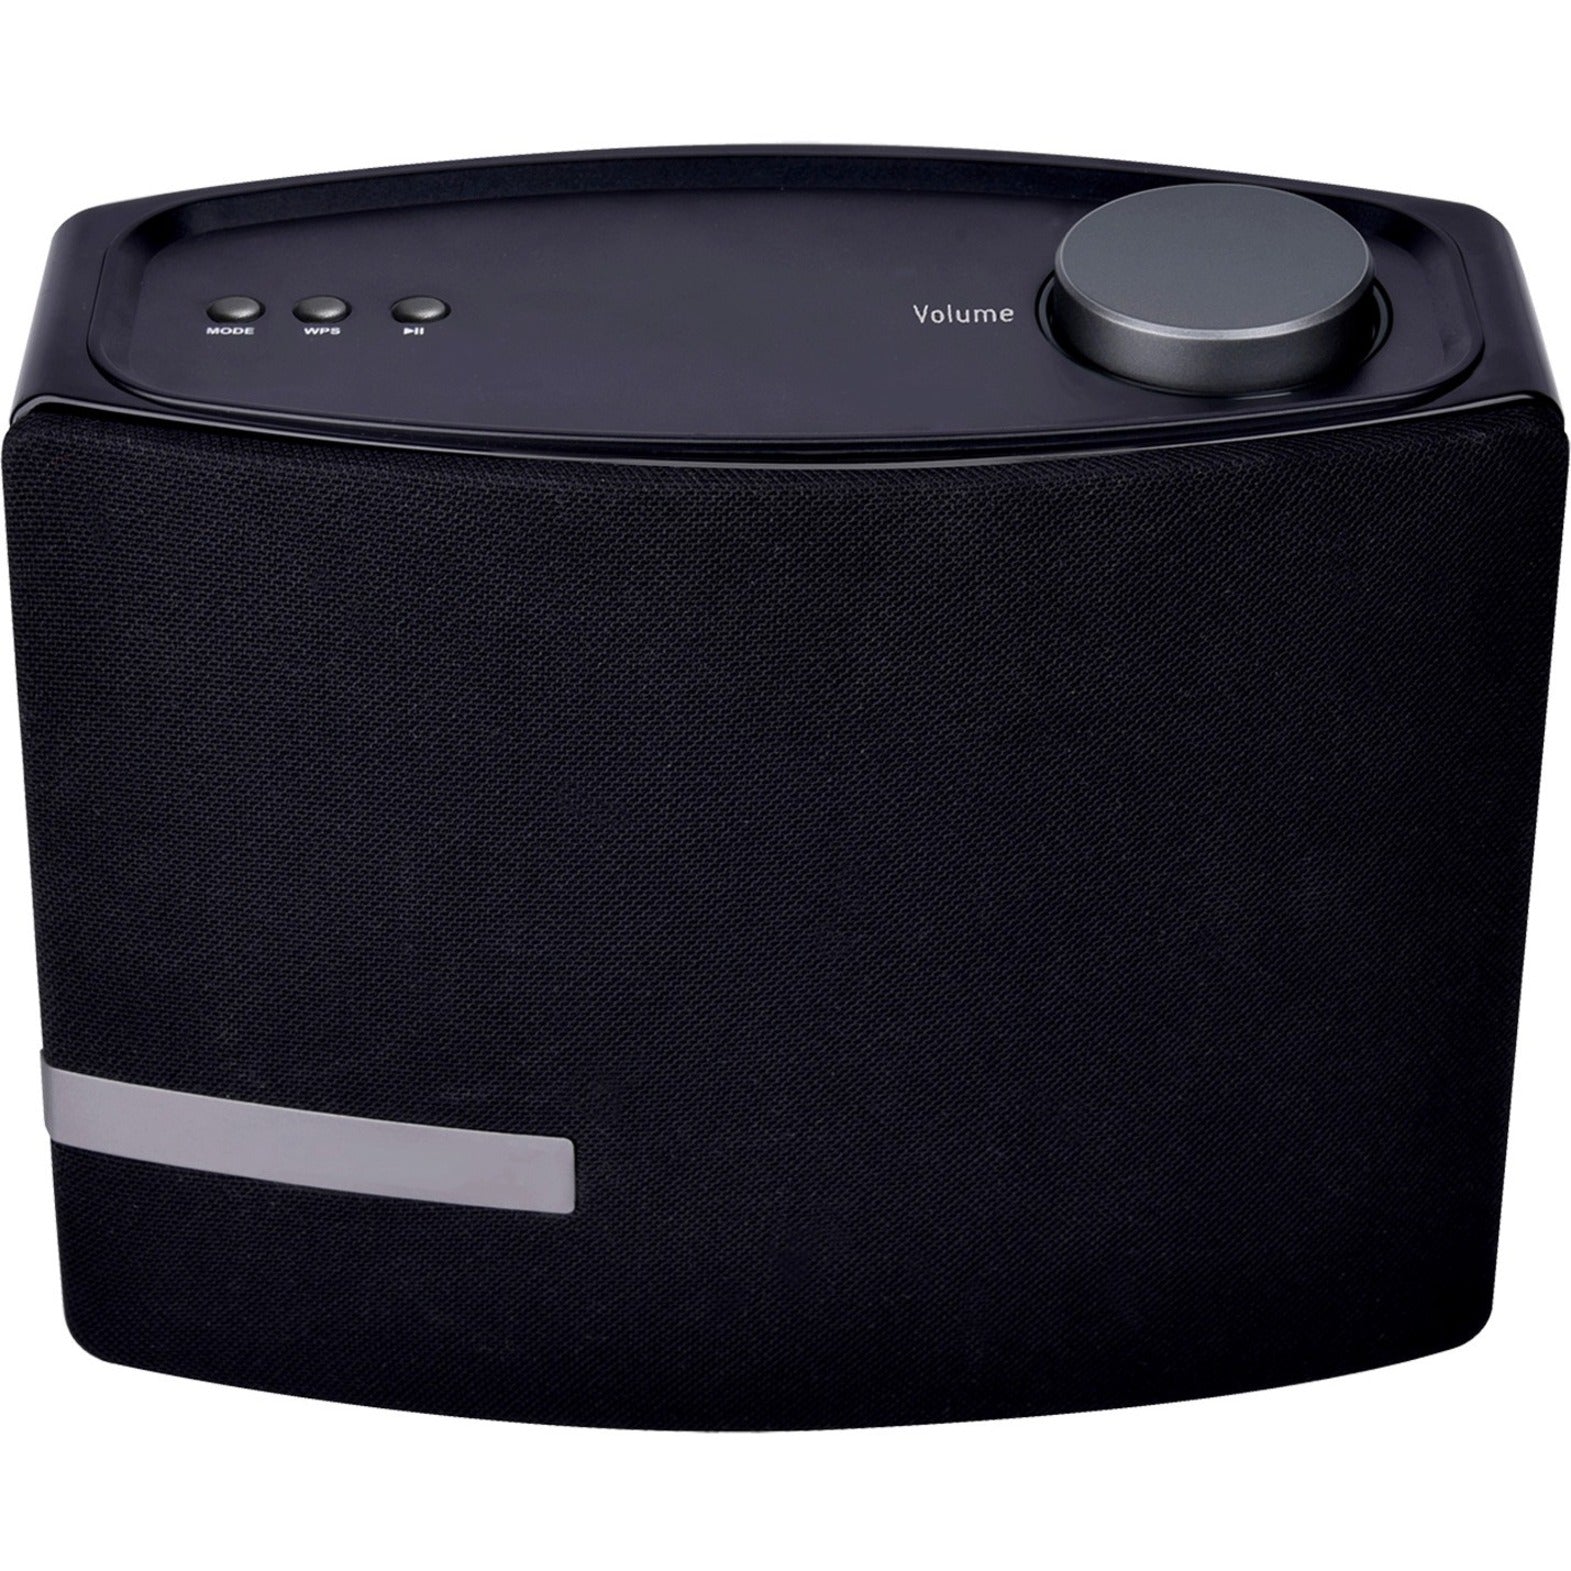 Naxa NAS-5001 Nas-5001 Speaker System, Wi-Fi & Bluetooth Multi-room Speaker with Amazon Alexa Voice Control